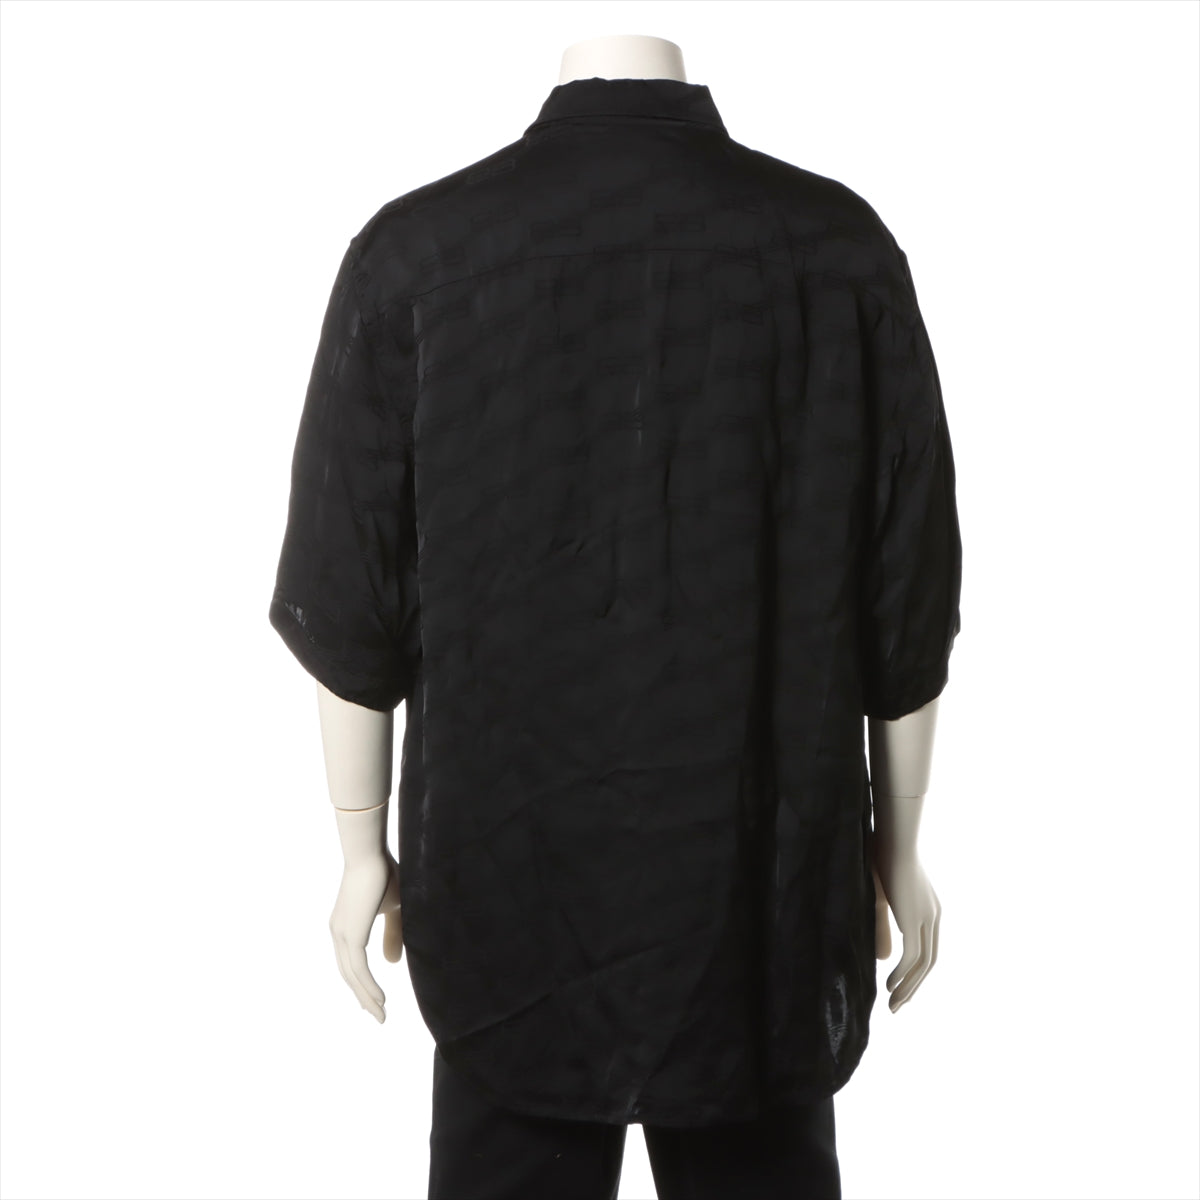 Balenciaga 23SS Rayon Shirt 37 Men's Black  681813 homewear